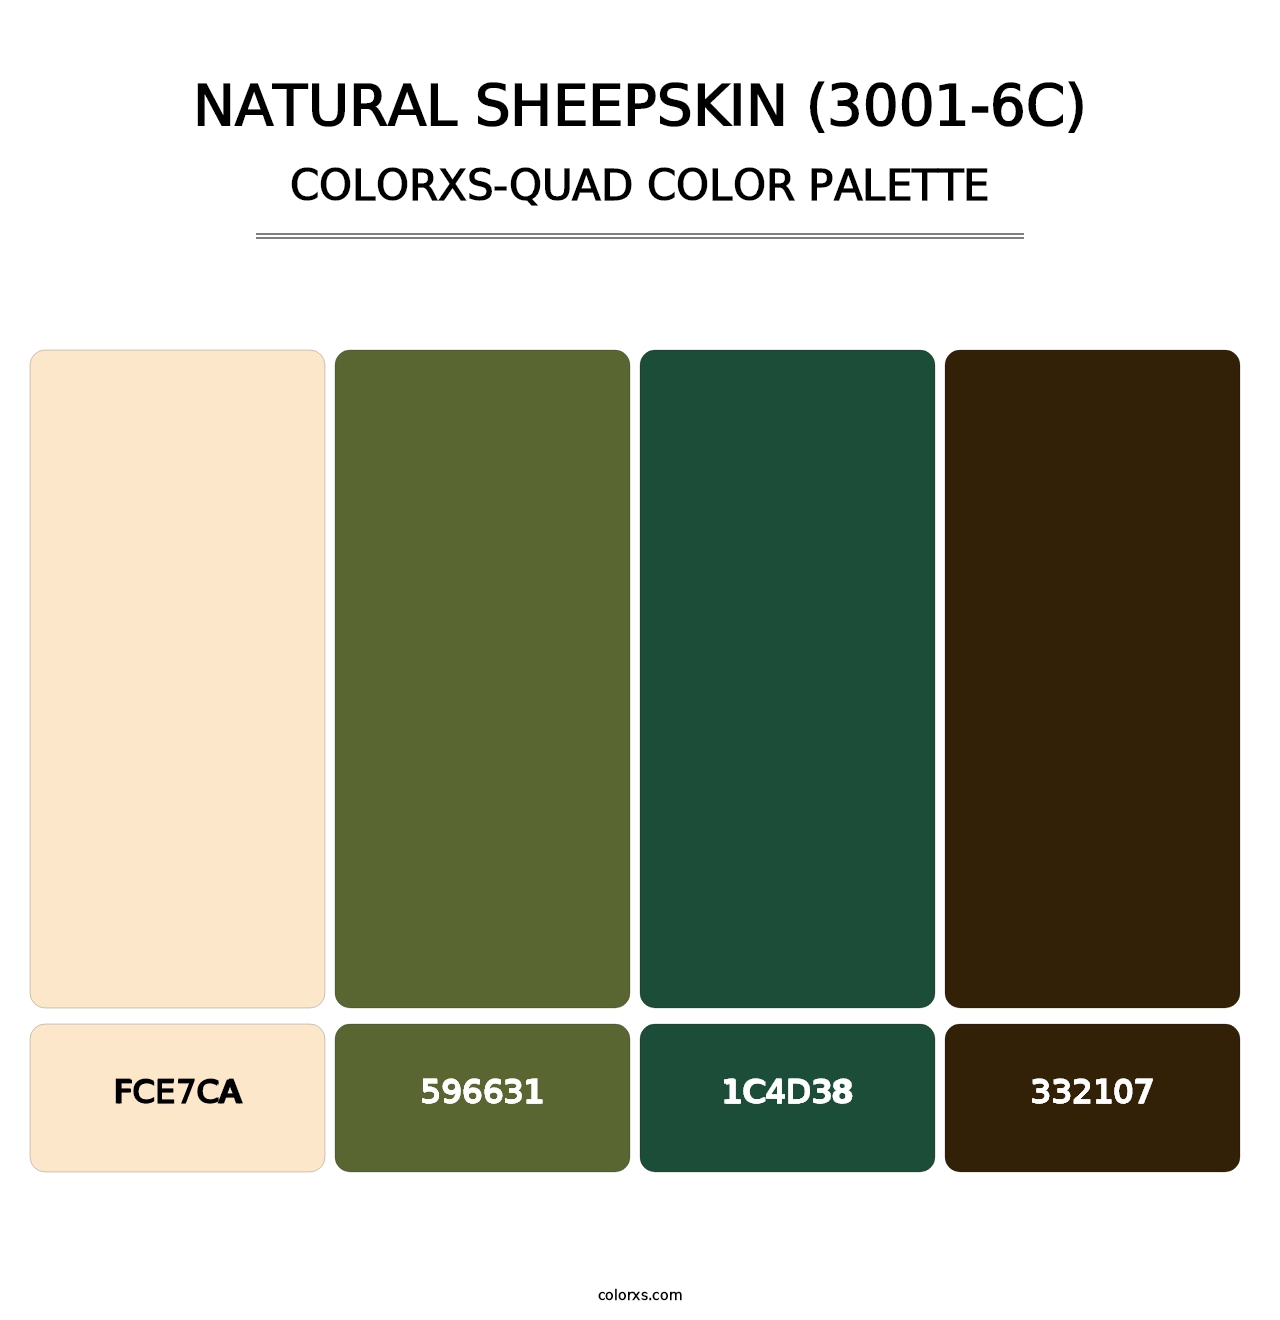 Natural Sheepskin (3001-6C) - Colorxs Quad Palette